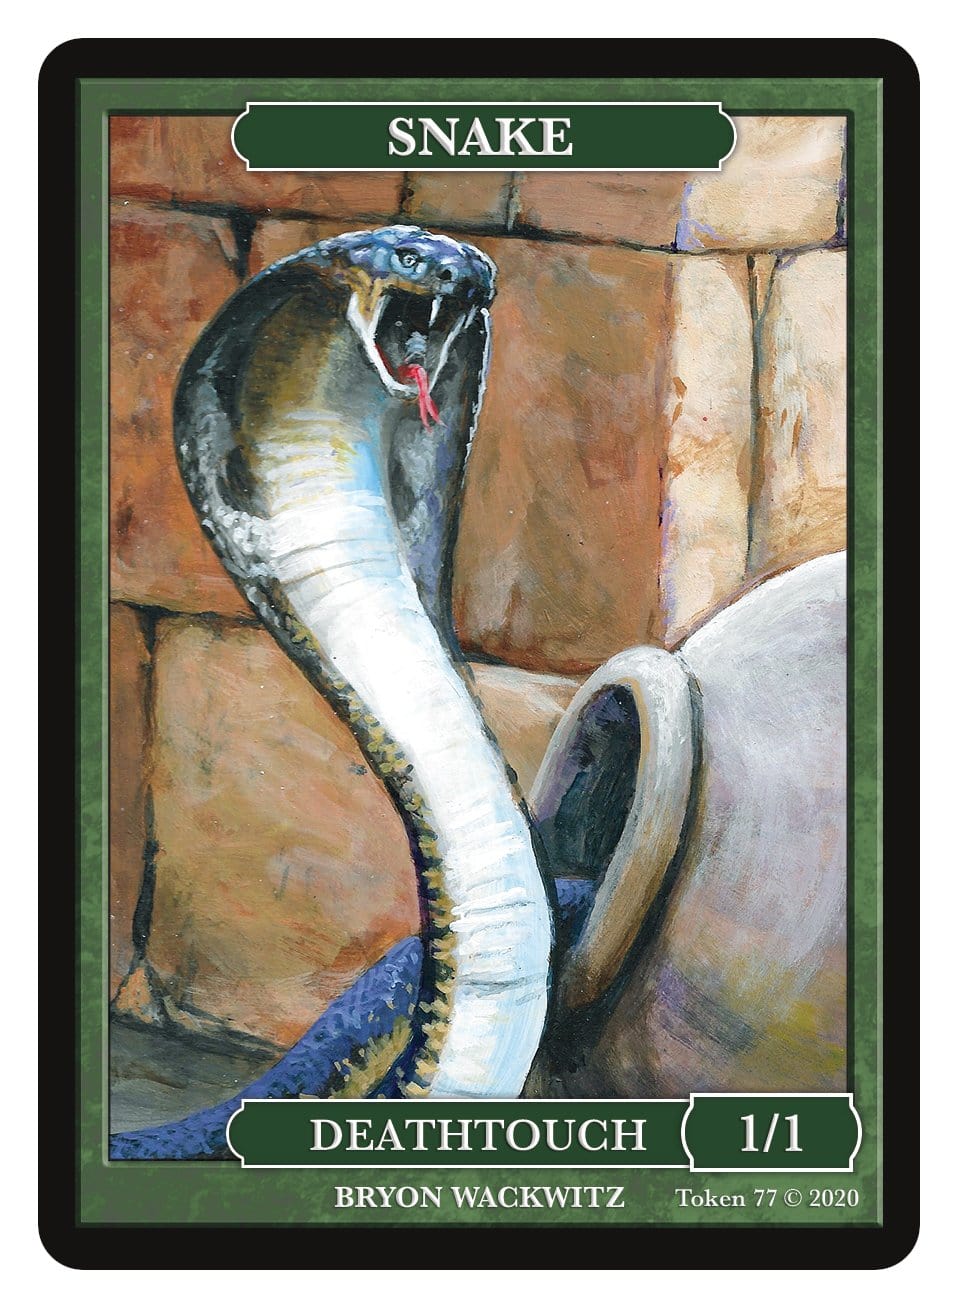 Snake Token (1/1 - Deathtouch) by Bryon Wackwitz